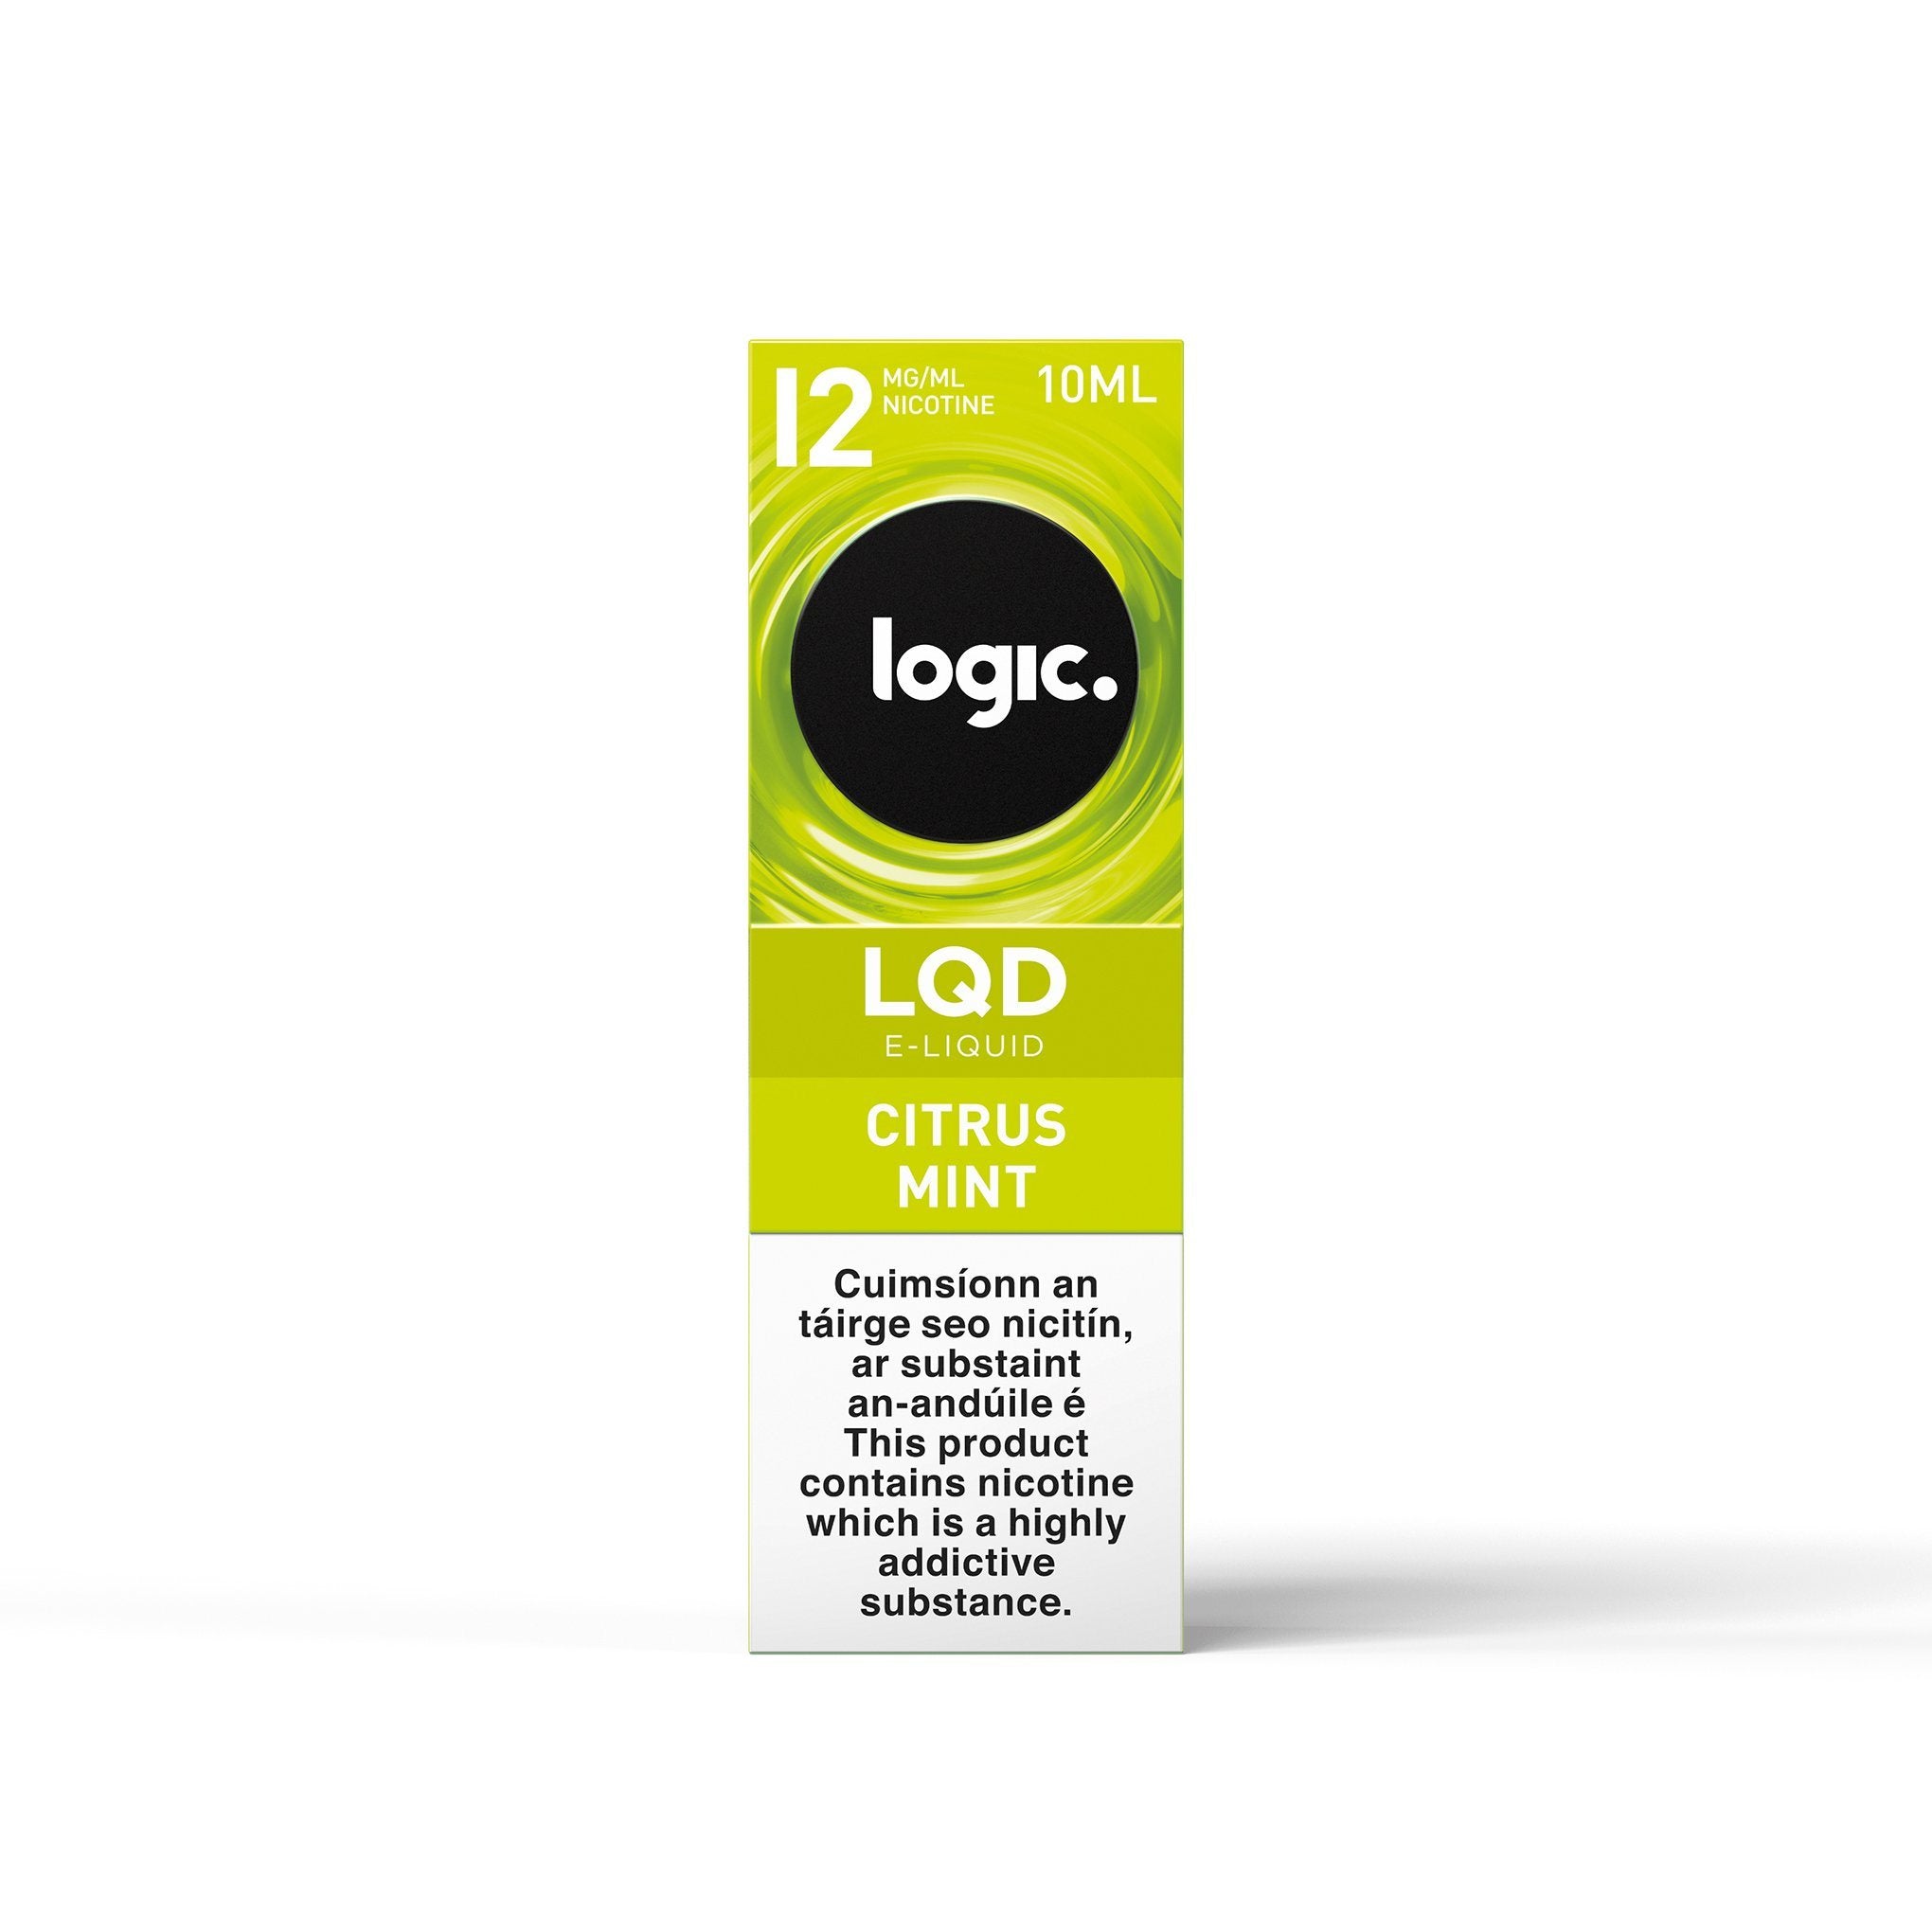 Logic LQD E-Liquid Citrus Mint 12MG - Medium Nicotine